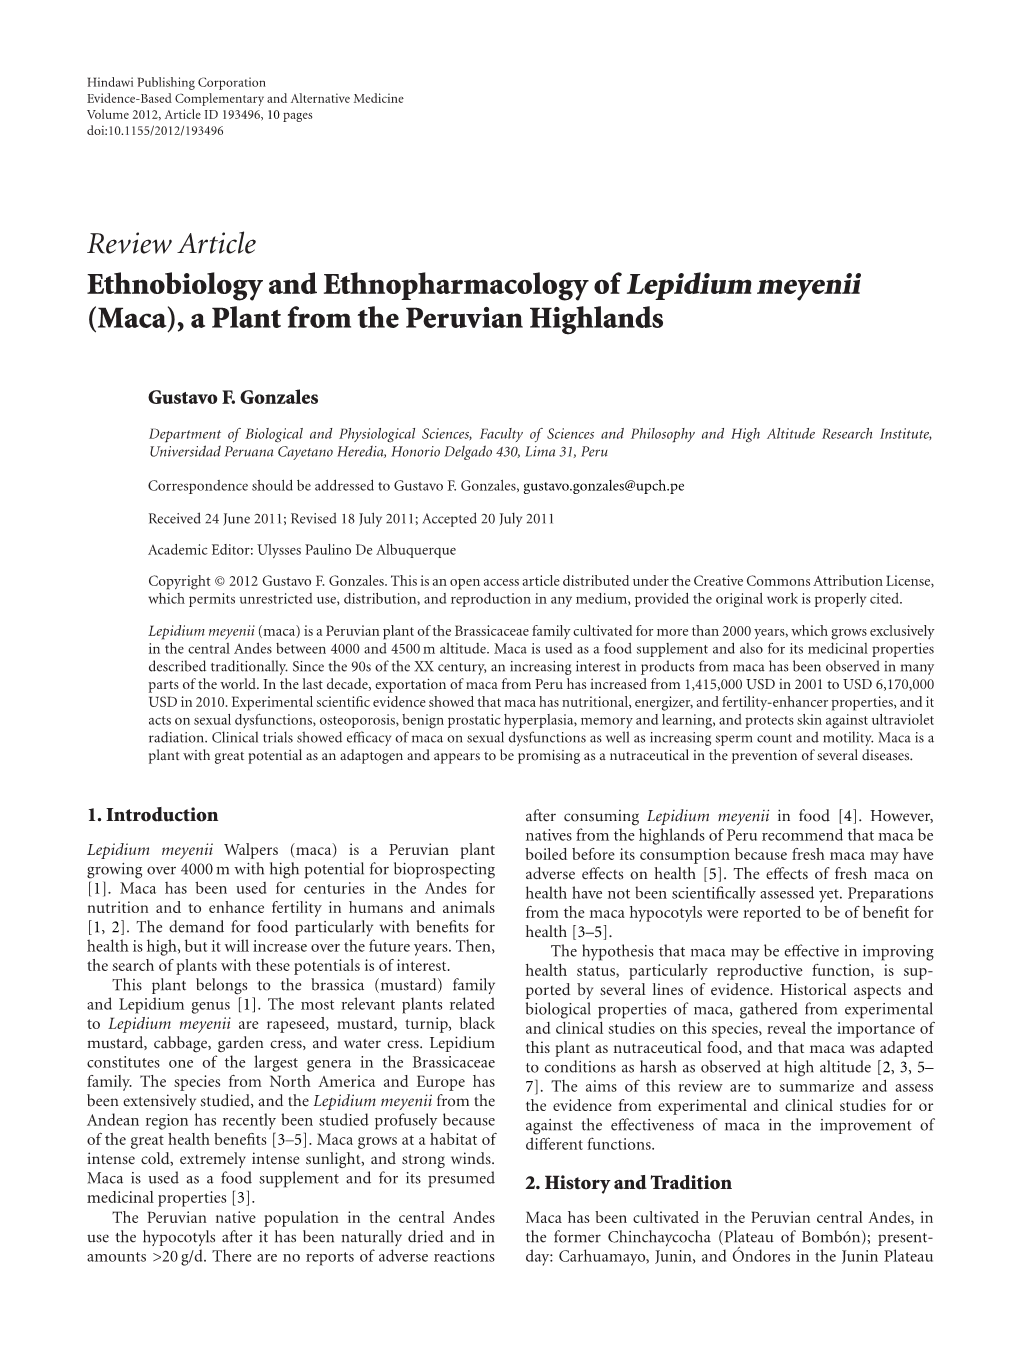 Ethnobiology and Ethnopharmacology of Lepidium Meyenii (Maca), a Plant from the Peruvian Highlands